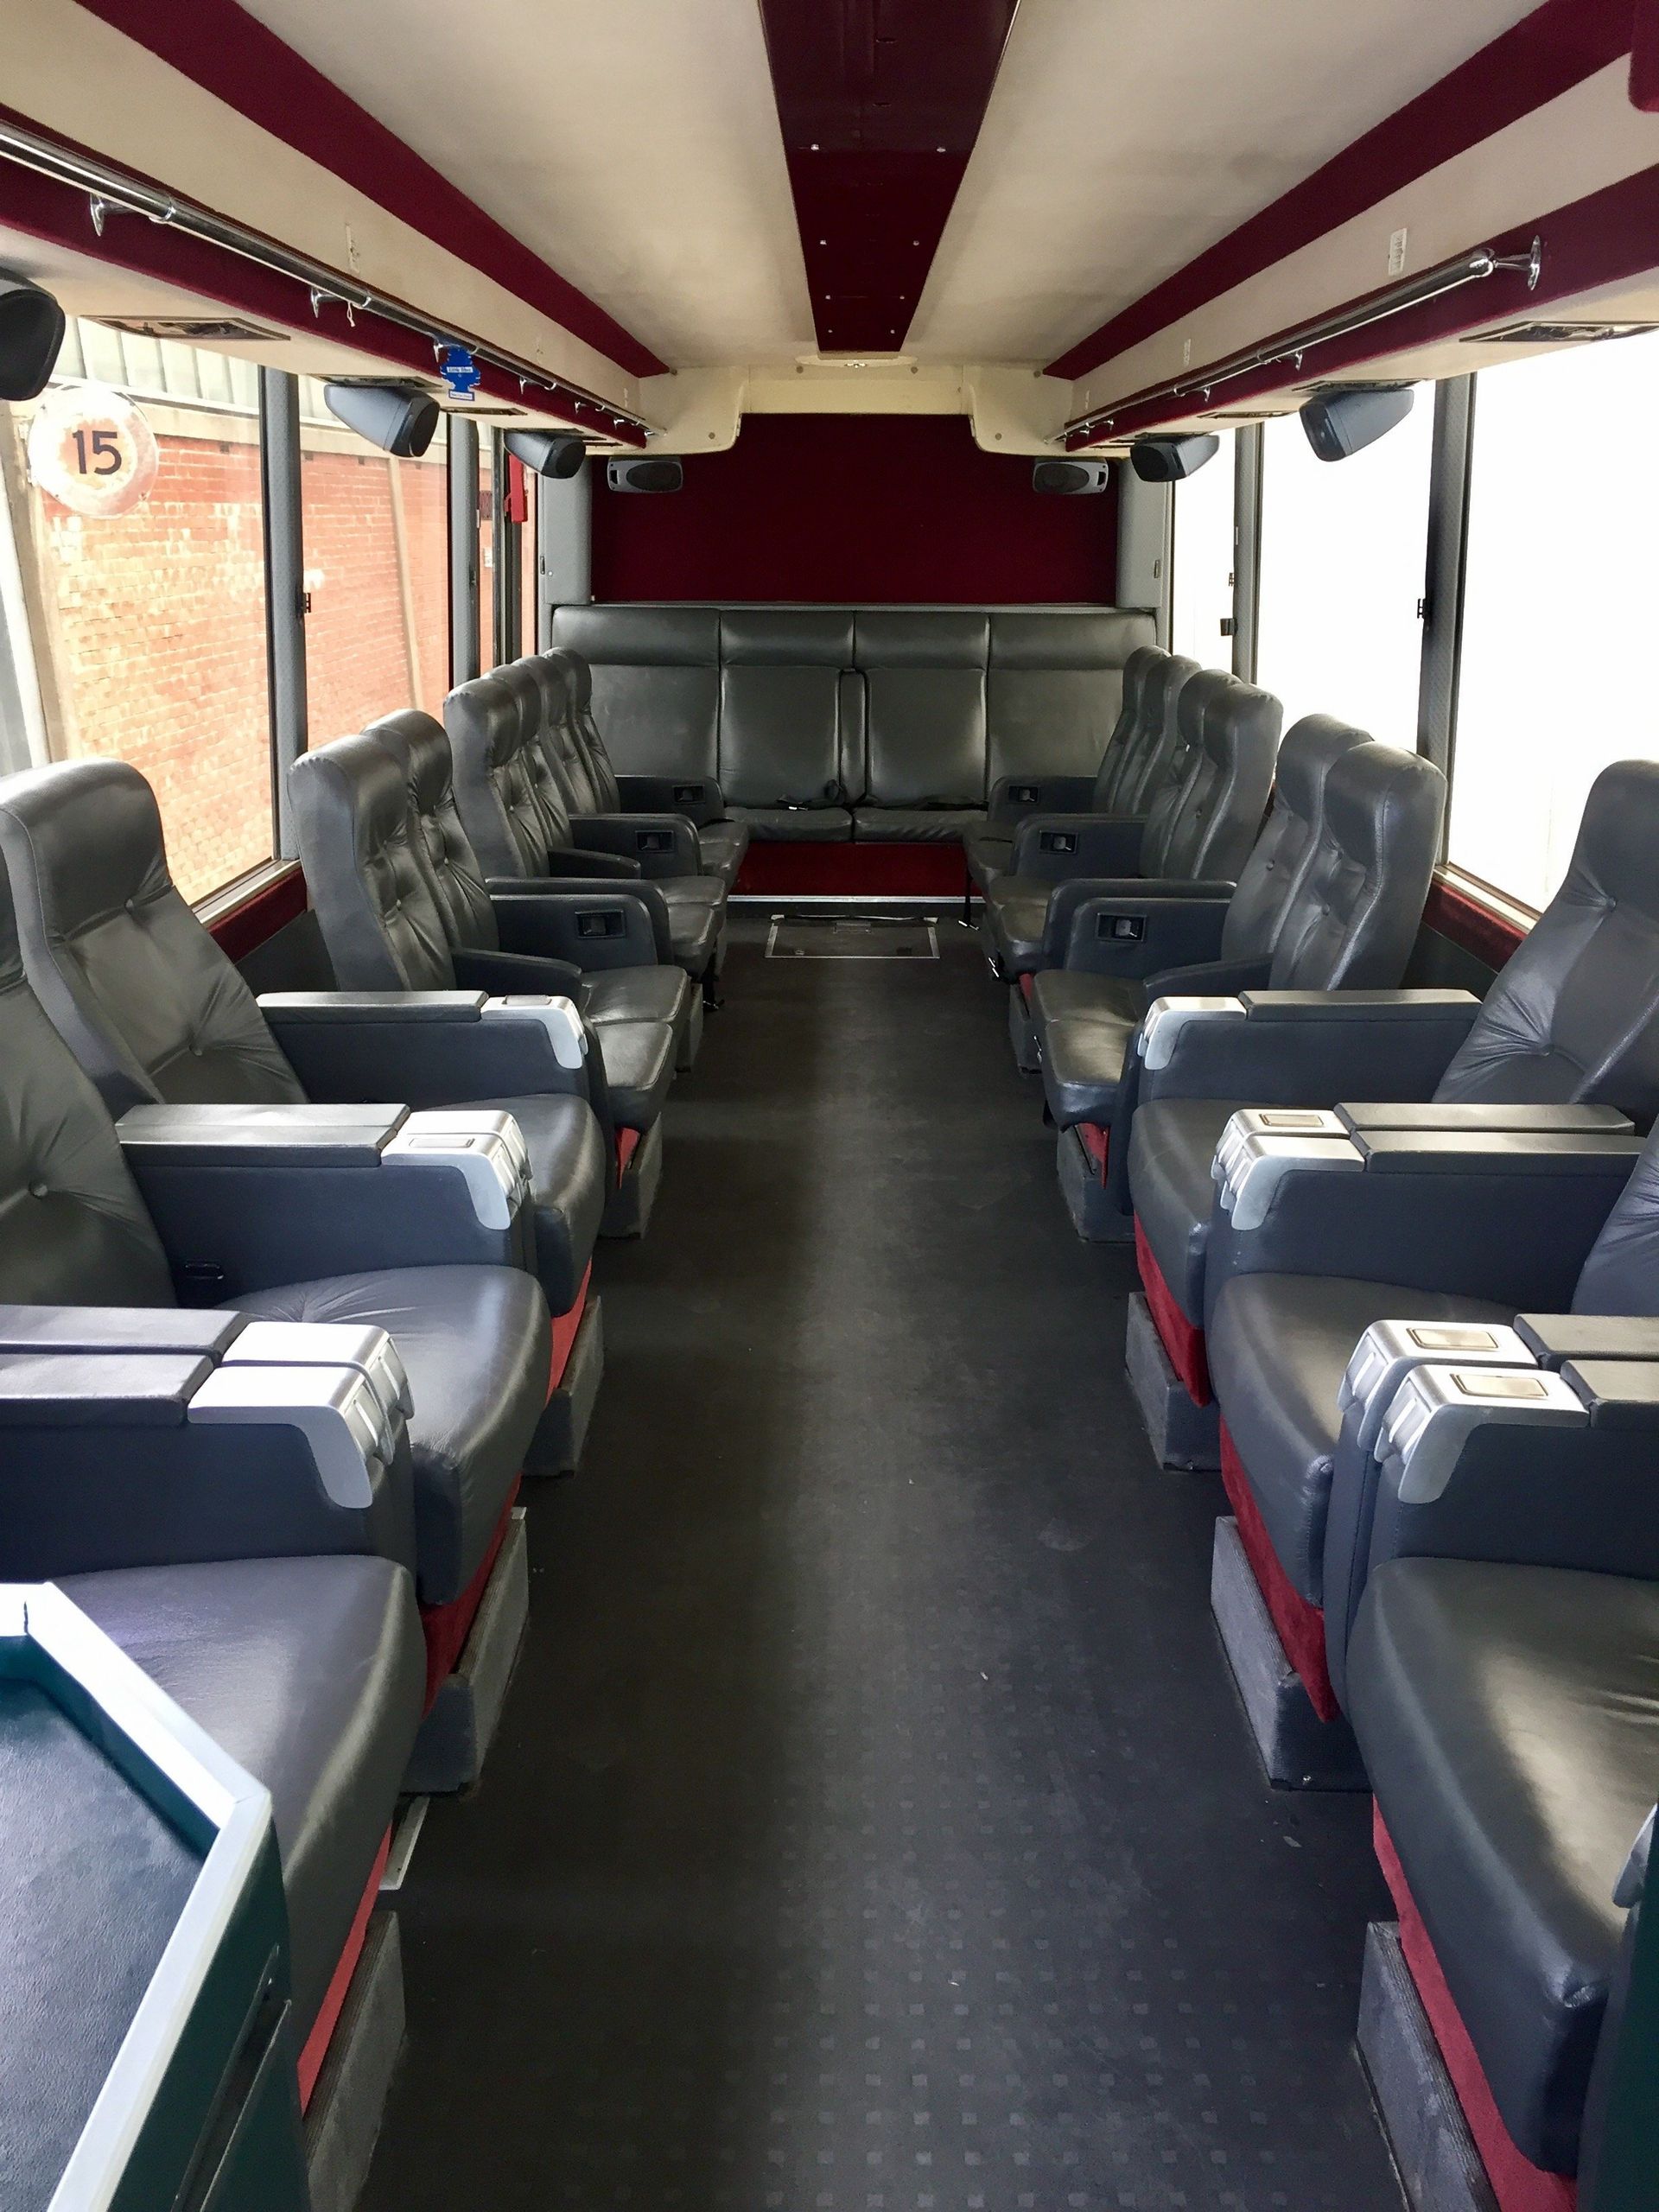 Interior view of a coach